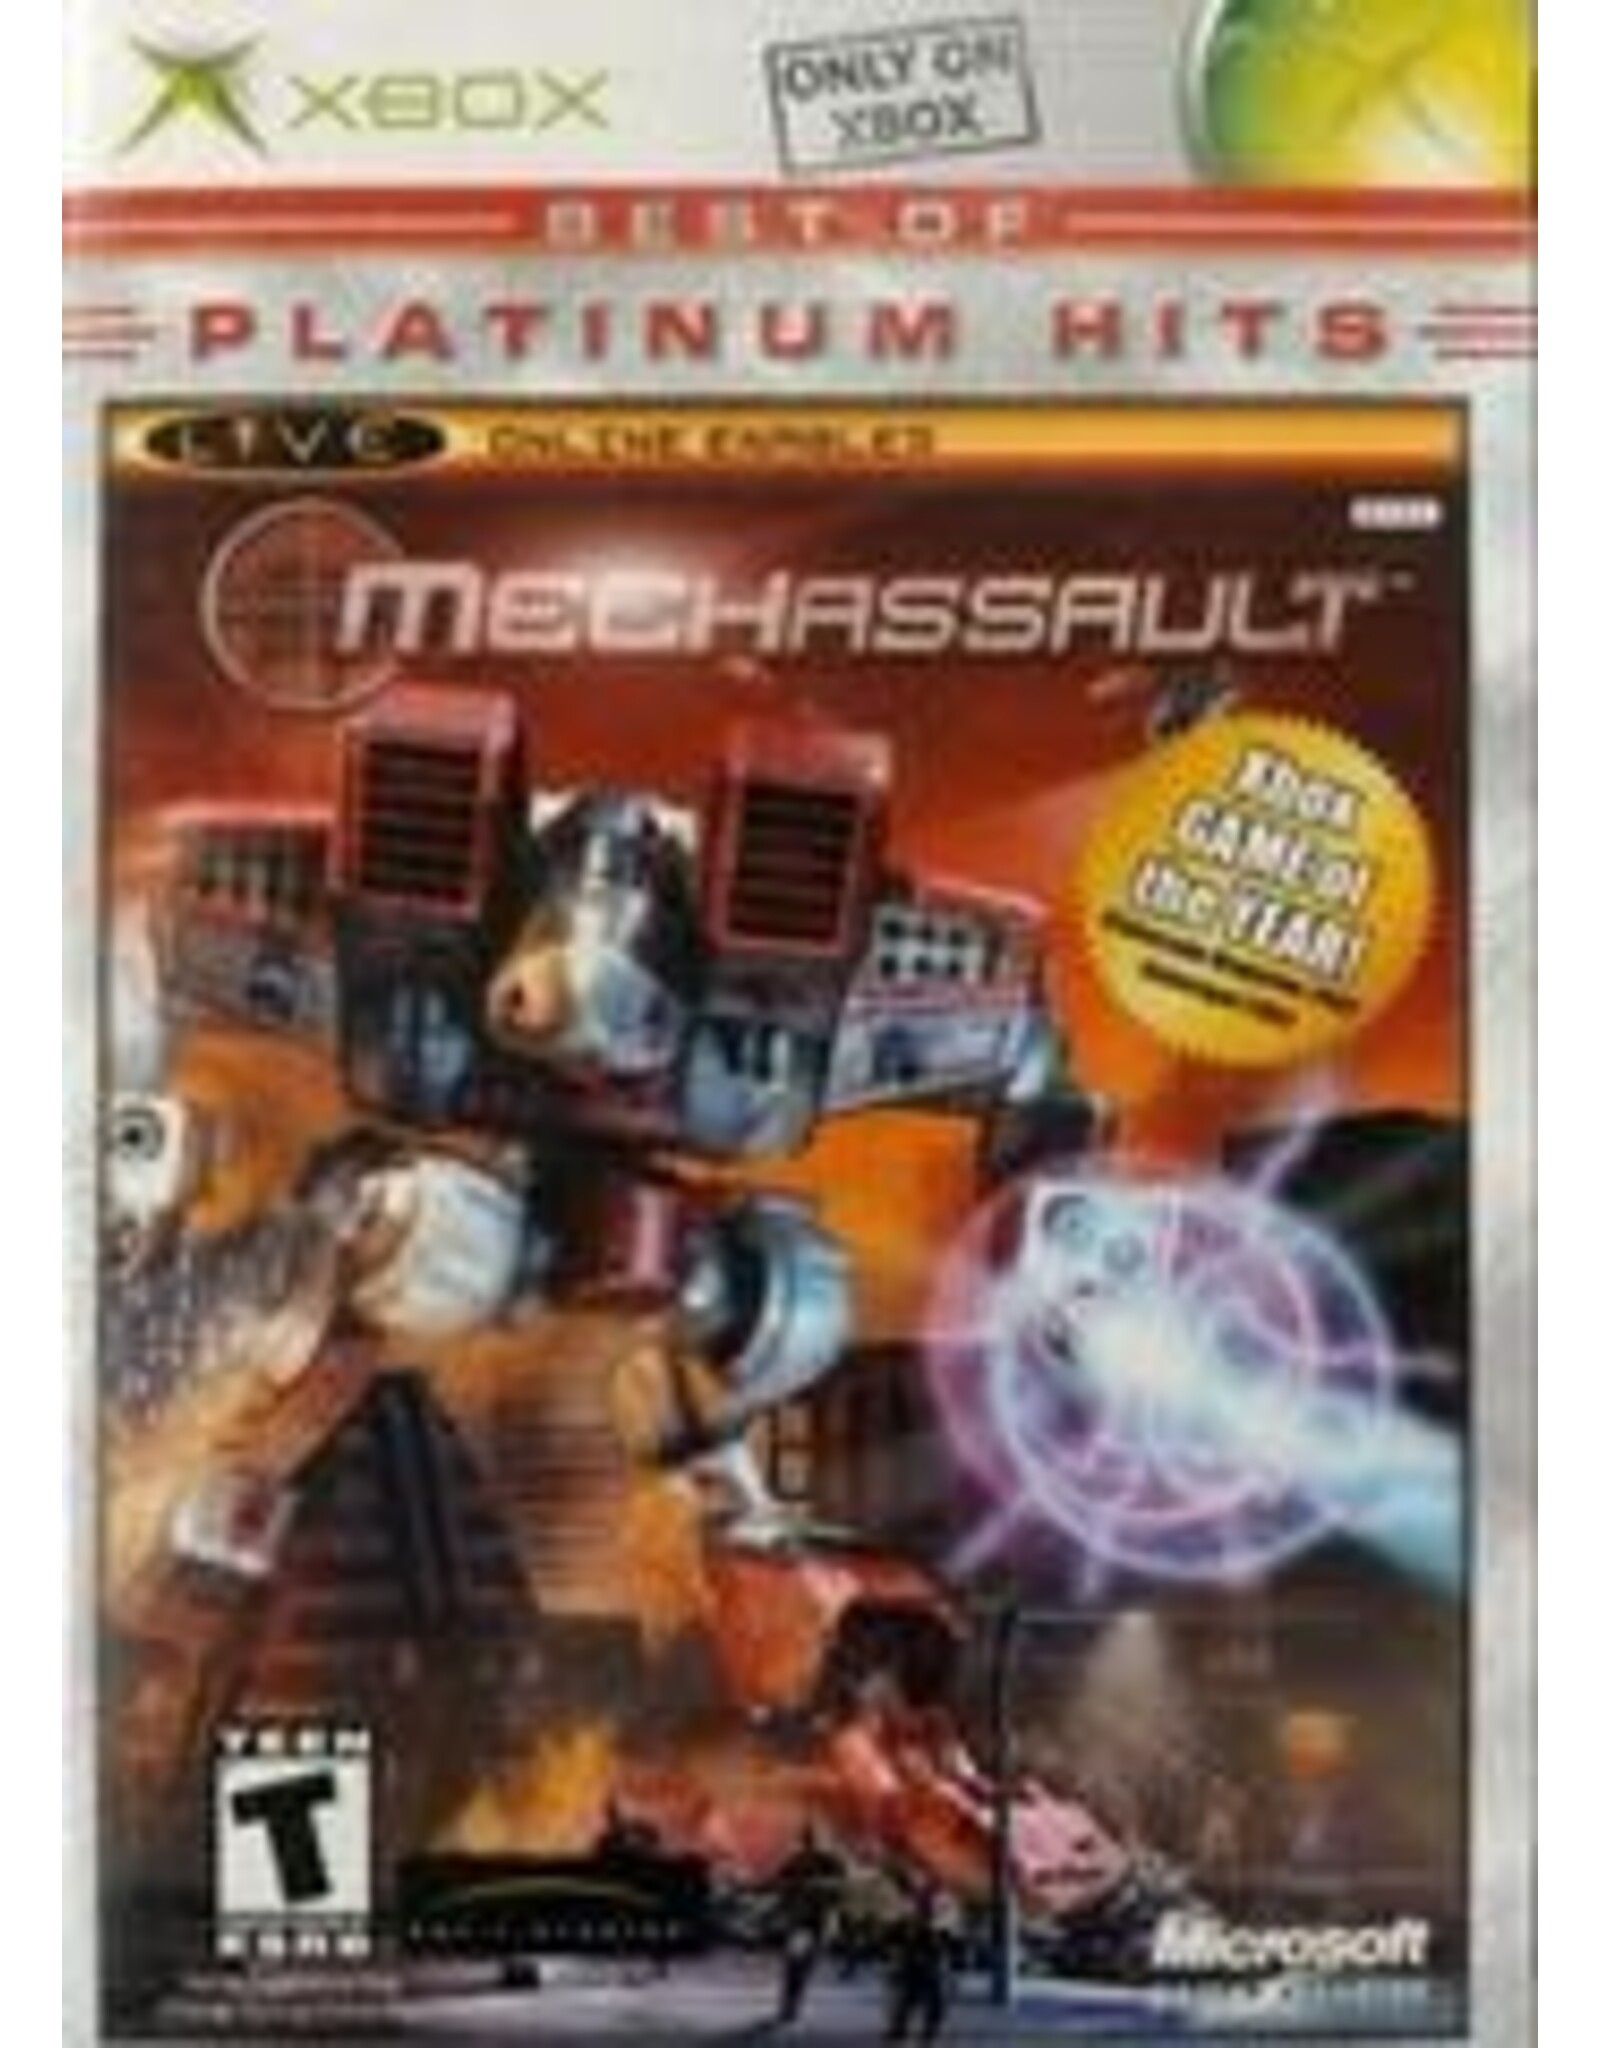 Xbox MechAssault (Best Of Platinum Hits, No Manual)